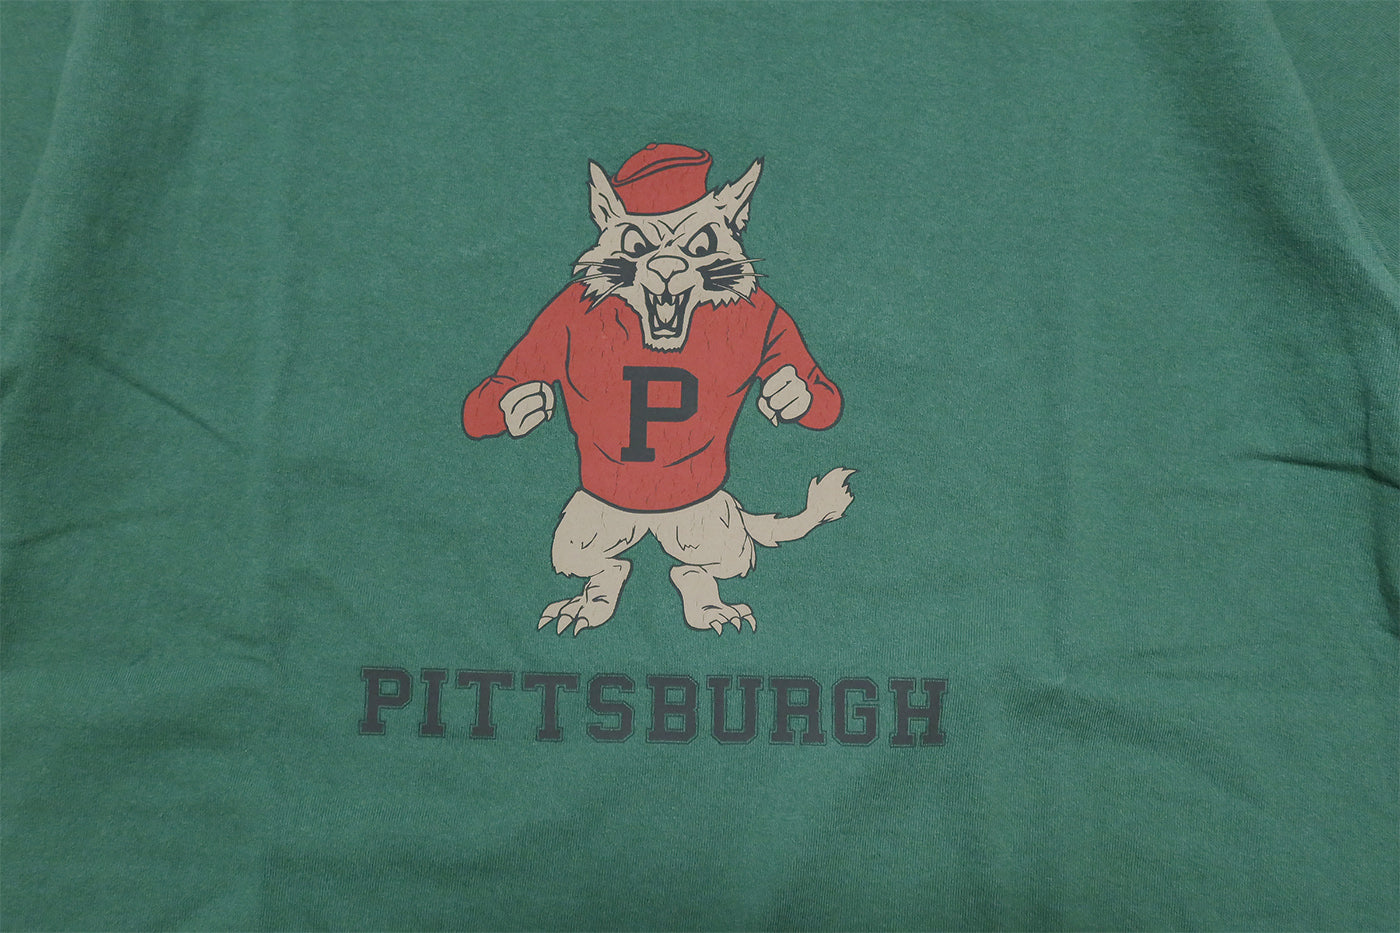 Pherrow's T-shirt PITTSBURGH Men's Short Sleeve Green Wolf 24S-PT6